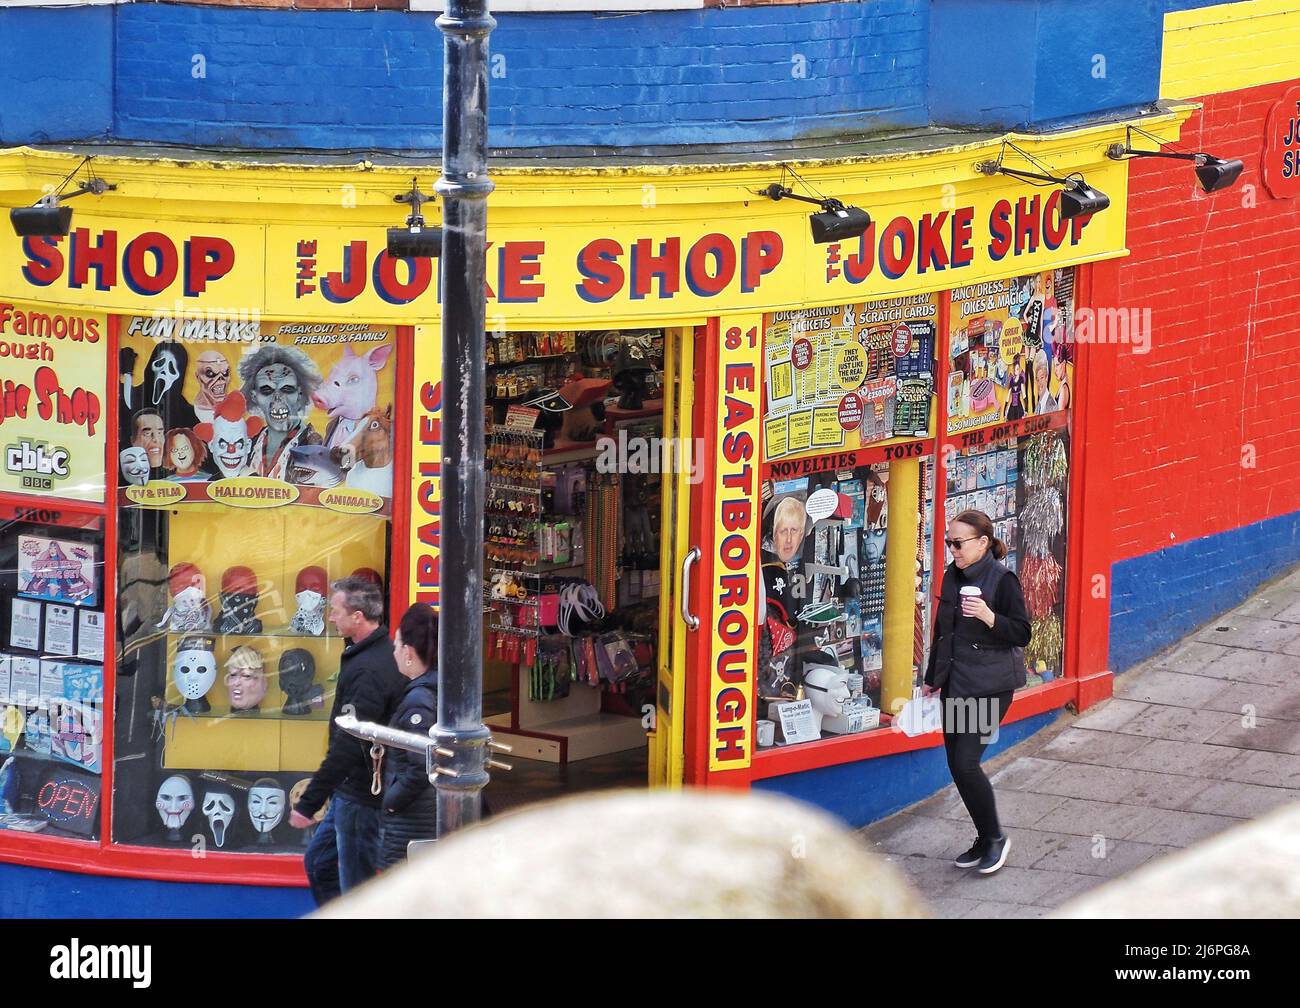 Joke shop in Scarborough Stock Photo